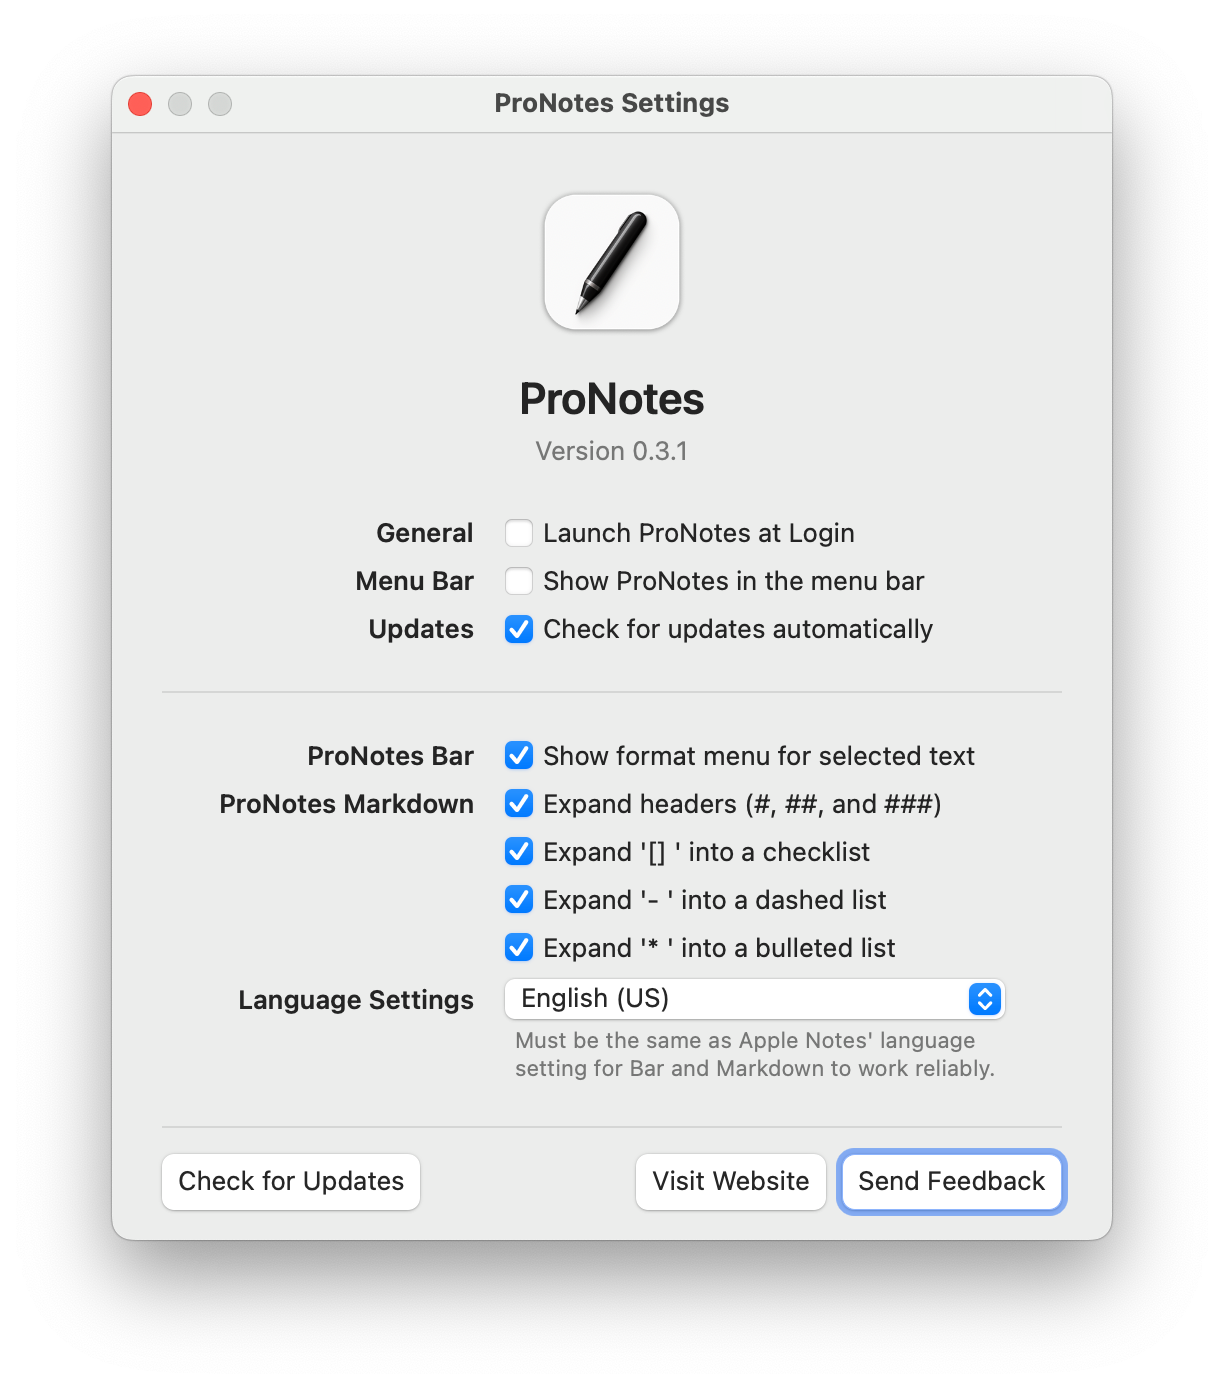 ProNotes settings panel